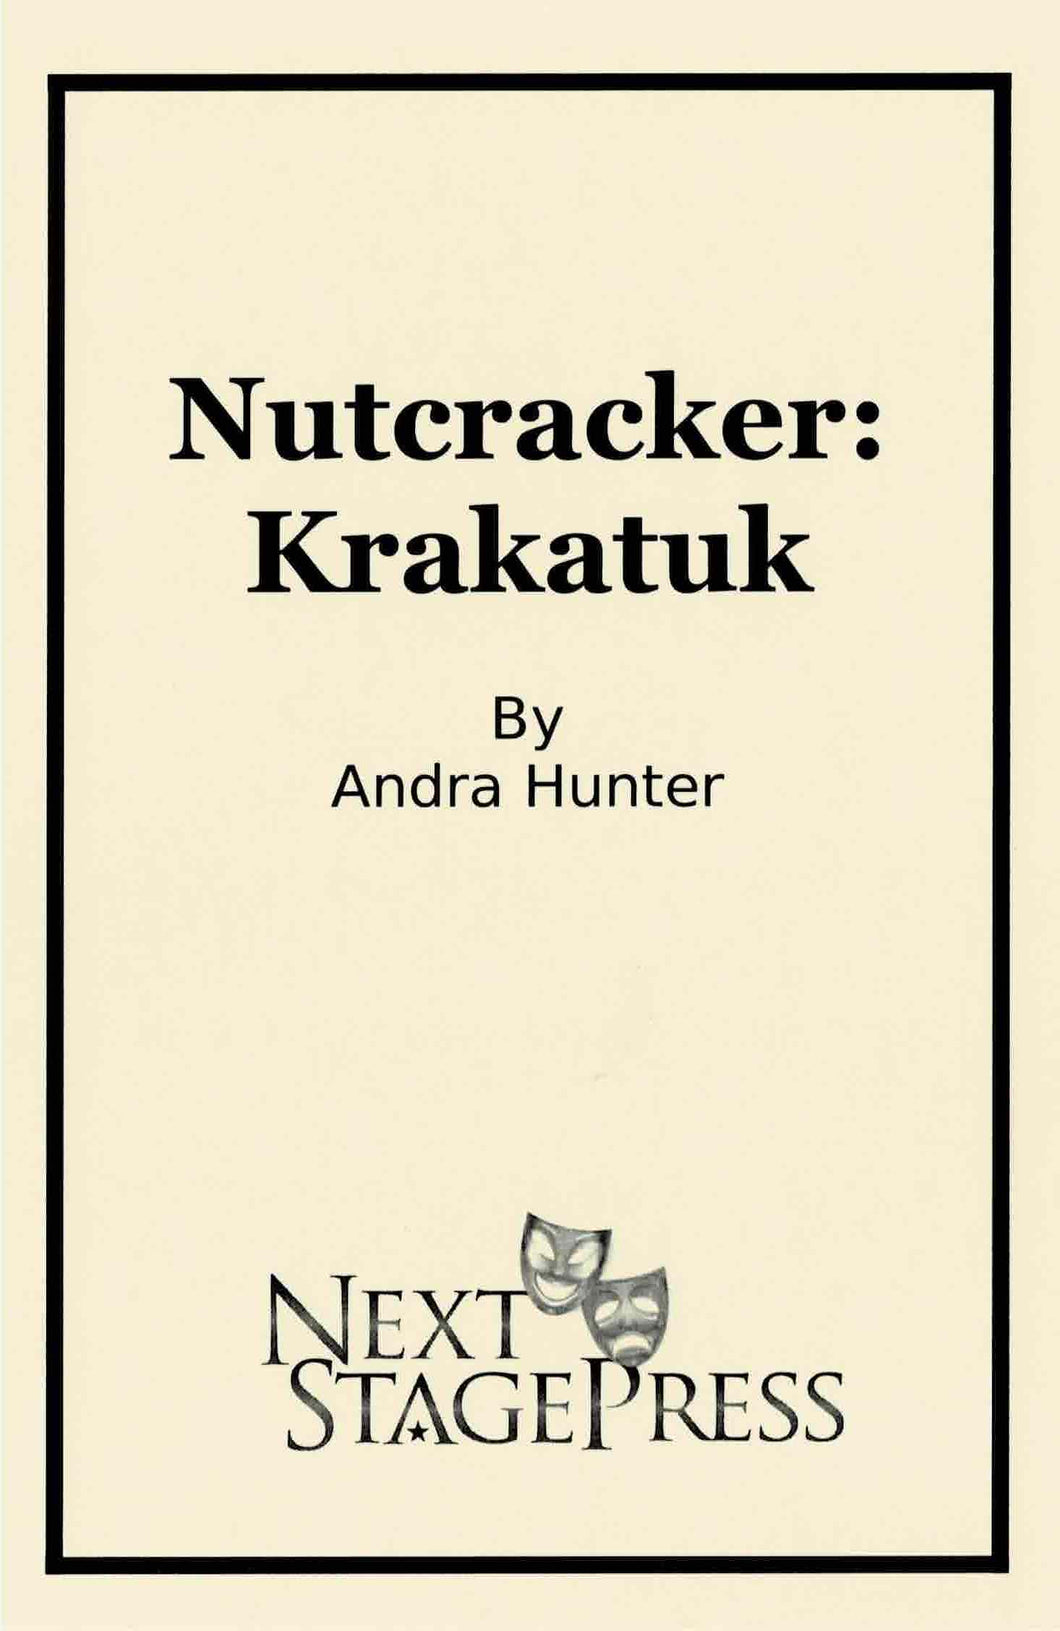 Nutcracker: Krakatuk